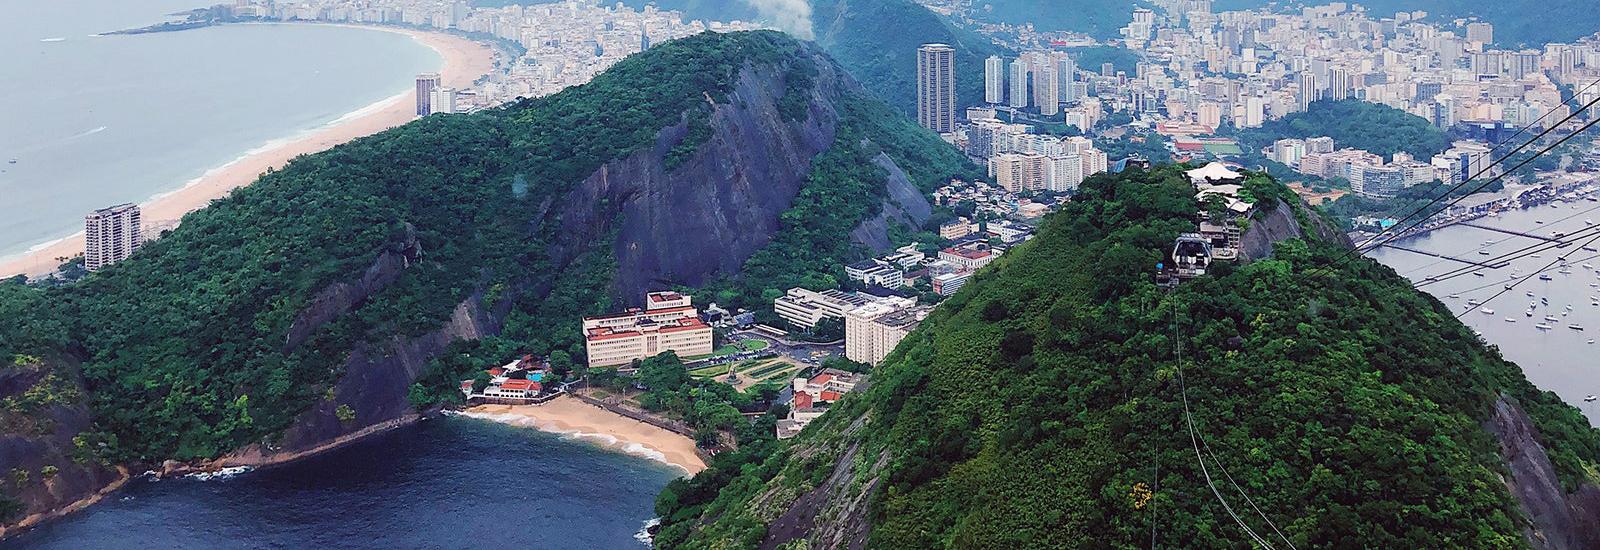 Rio de Janeiro, Brazil - photo source: Nick Remsen